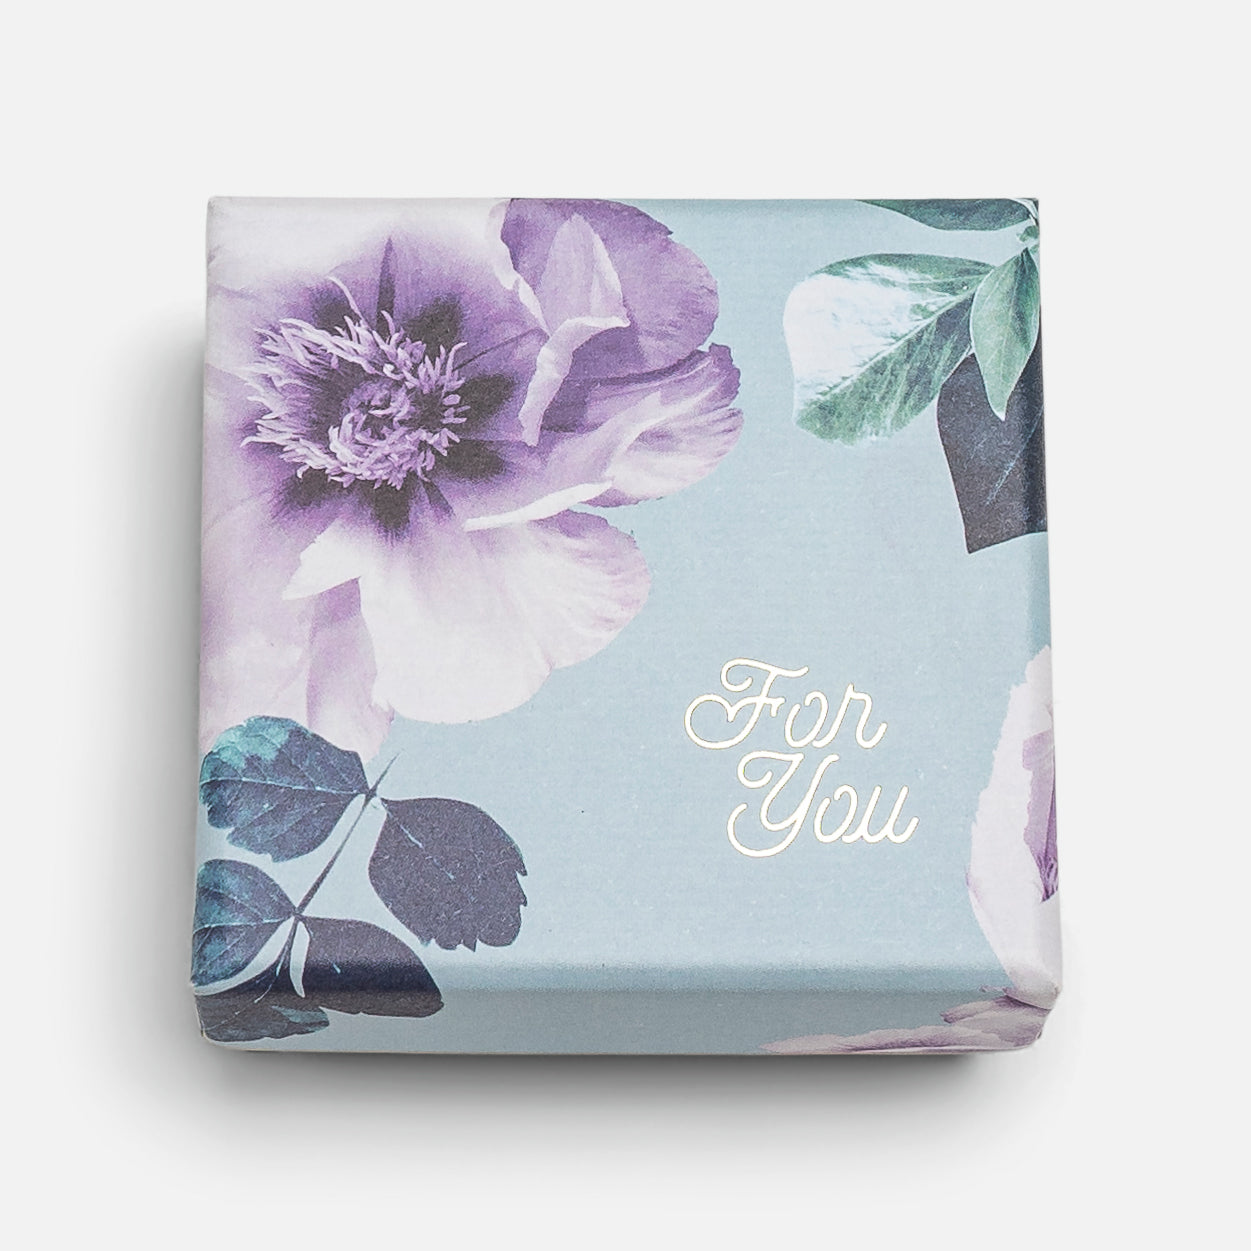 Flower print ring box for the operation enfant soleil